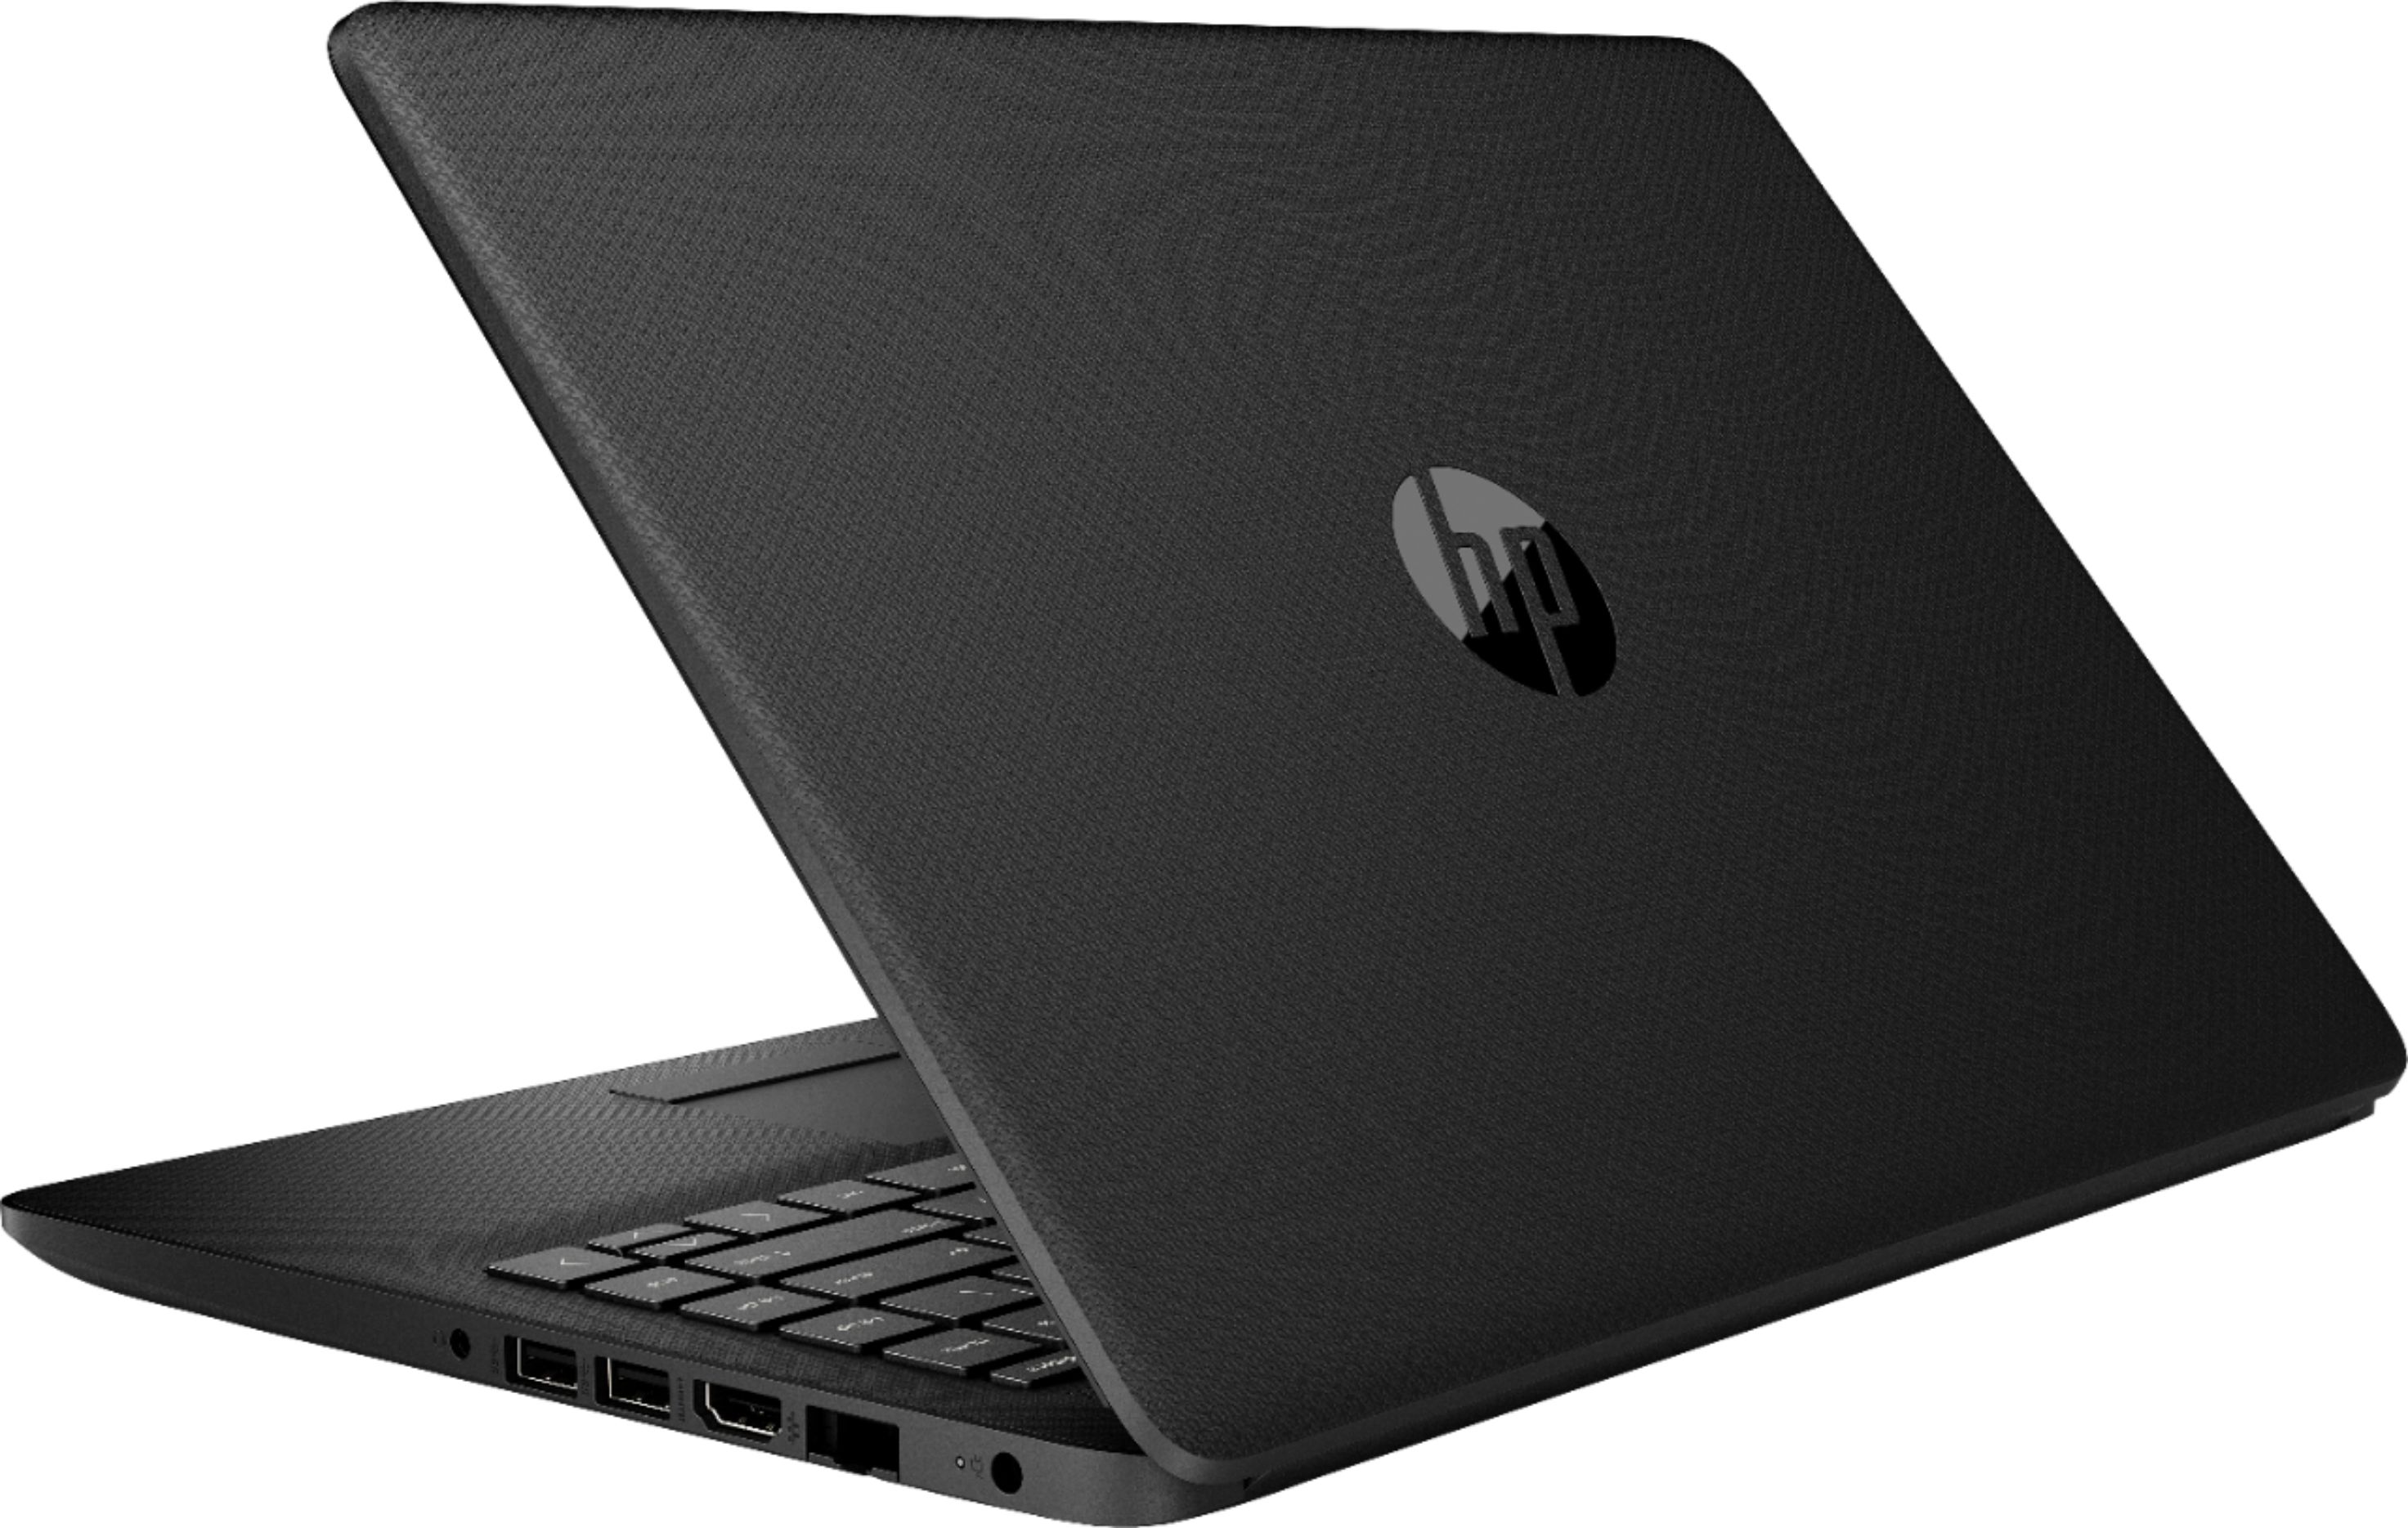 HP 14" Laptop AMD Ryzen 3 8GB Memory 1TB HDD Jet Black 14dk1031dx